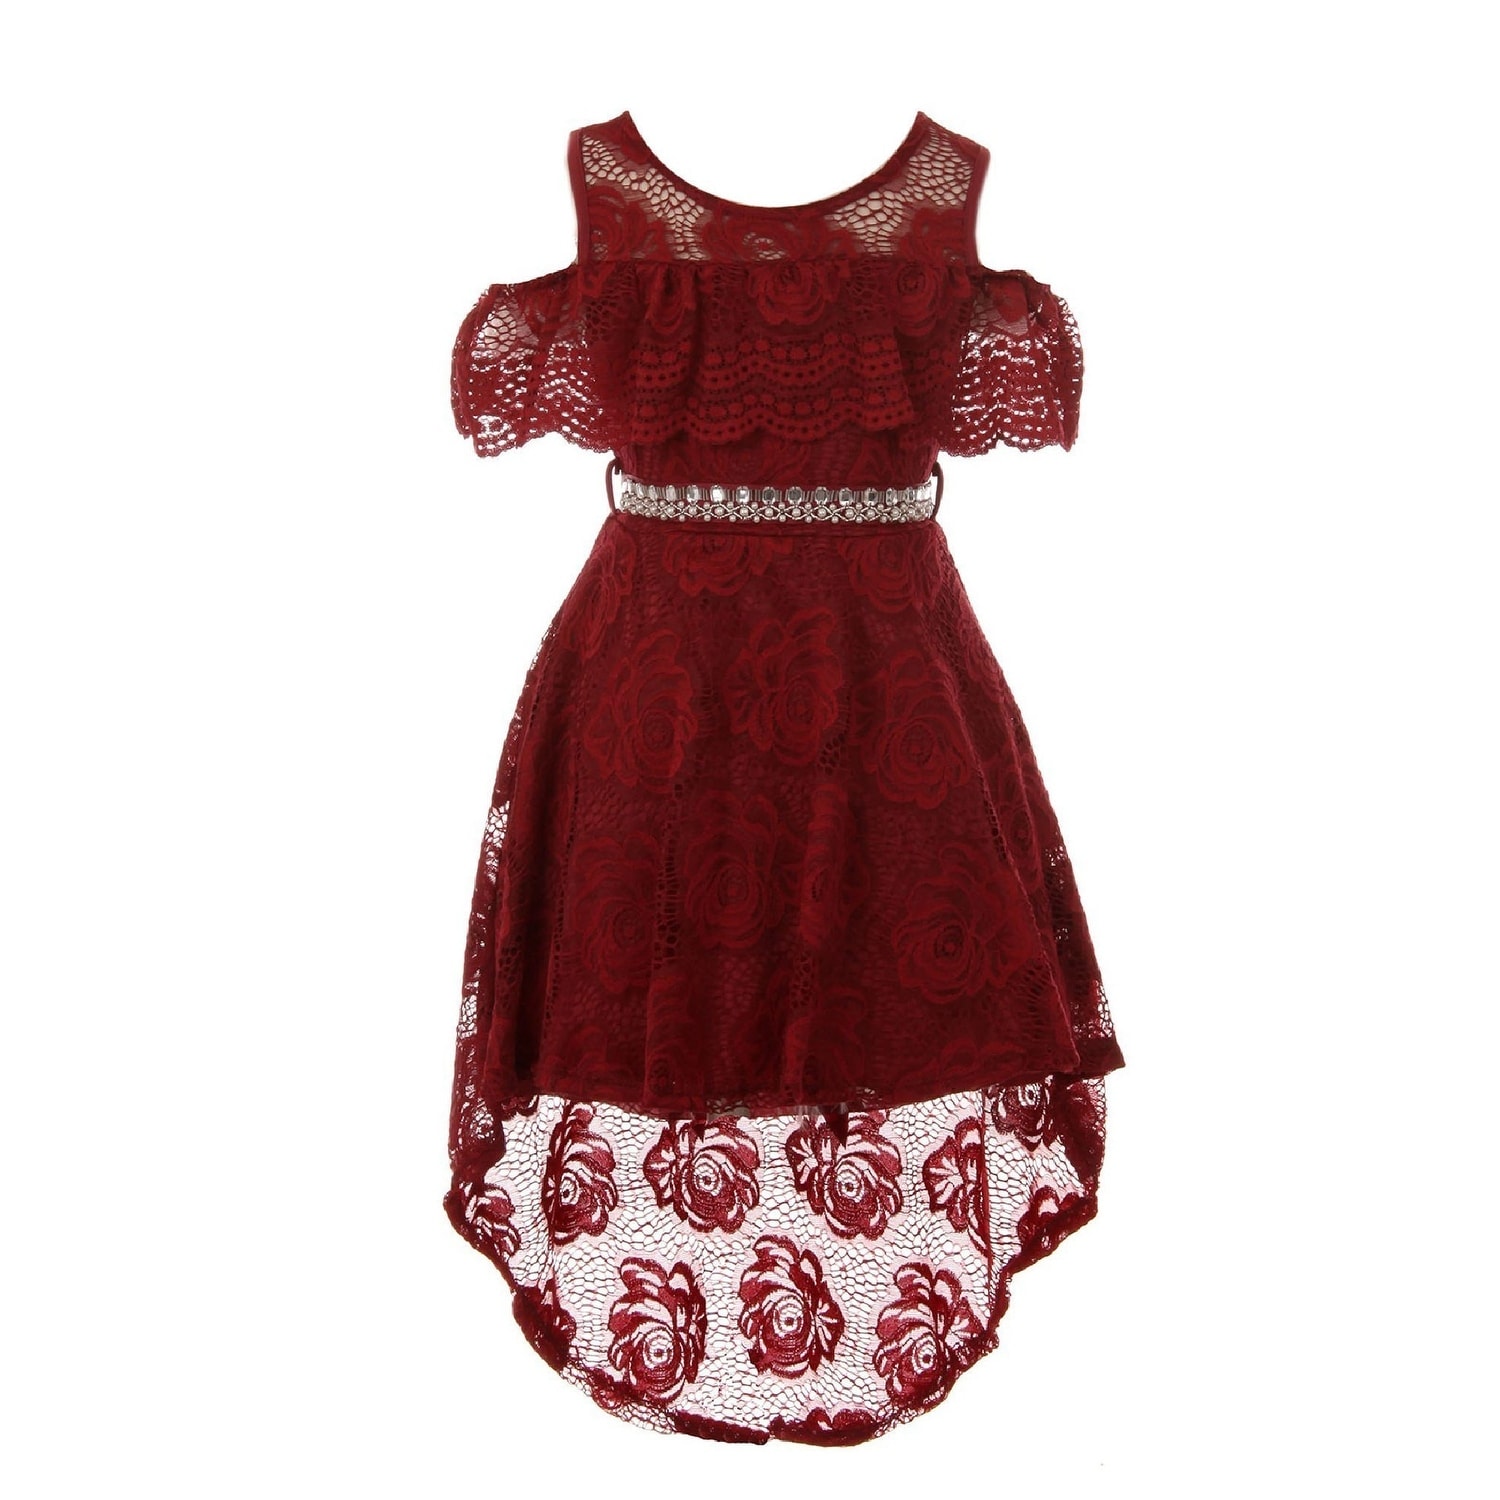 burgundy lace dress for little girl